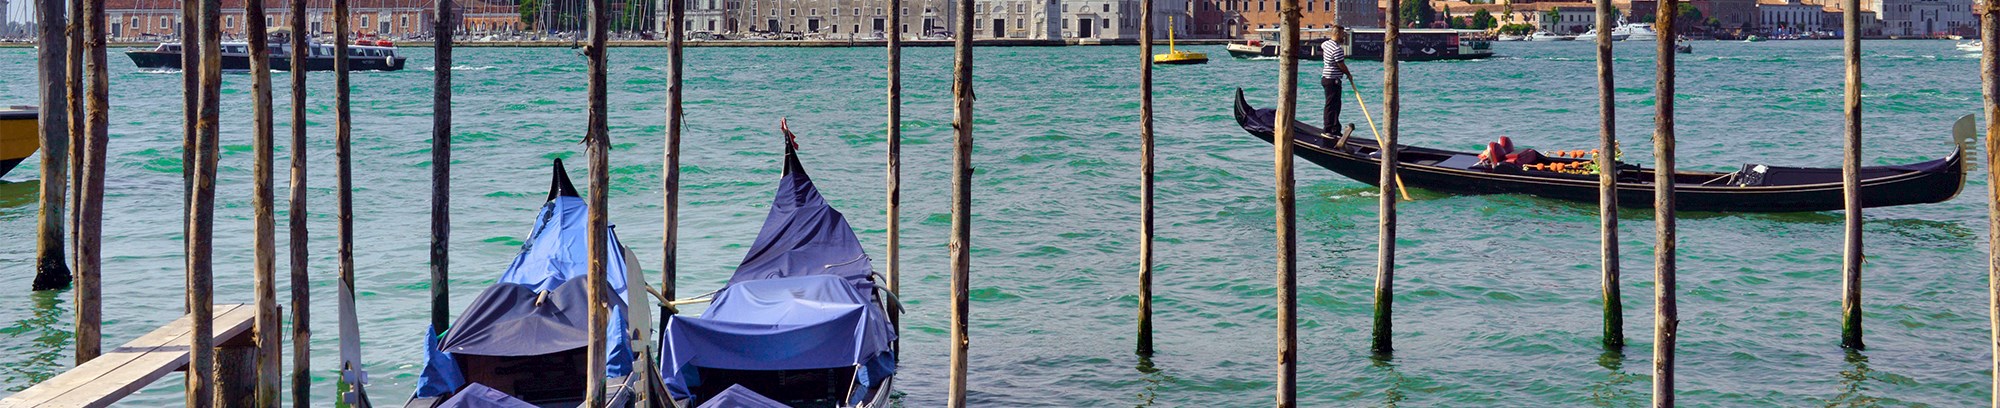 Gondola på kanal i Venedig i Italien